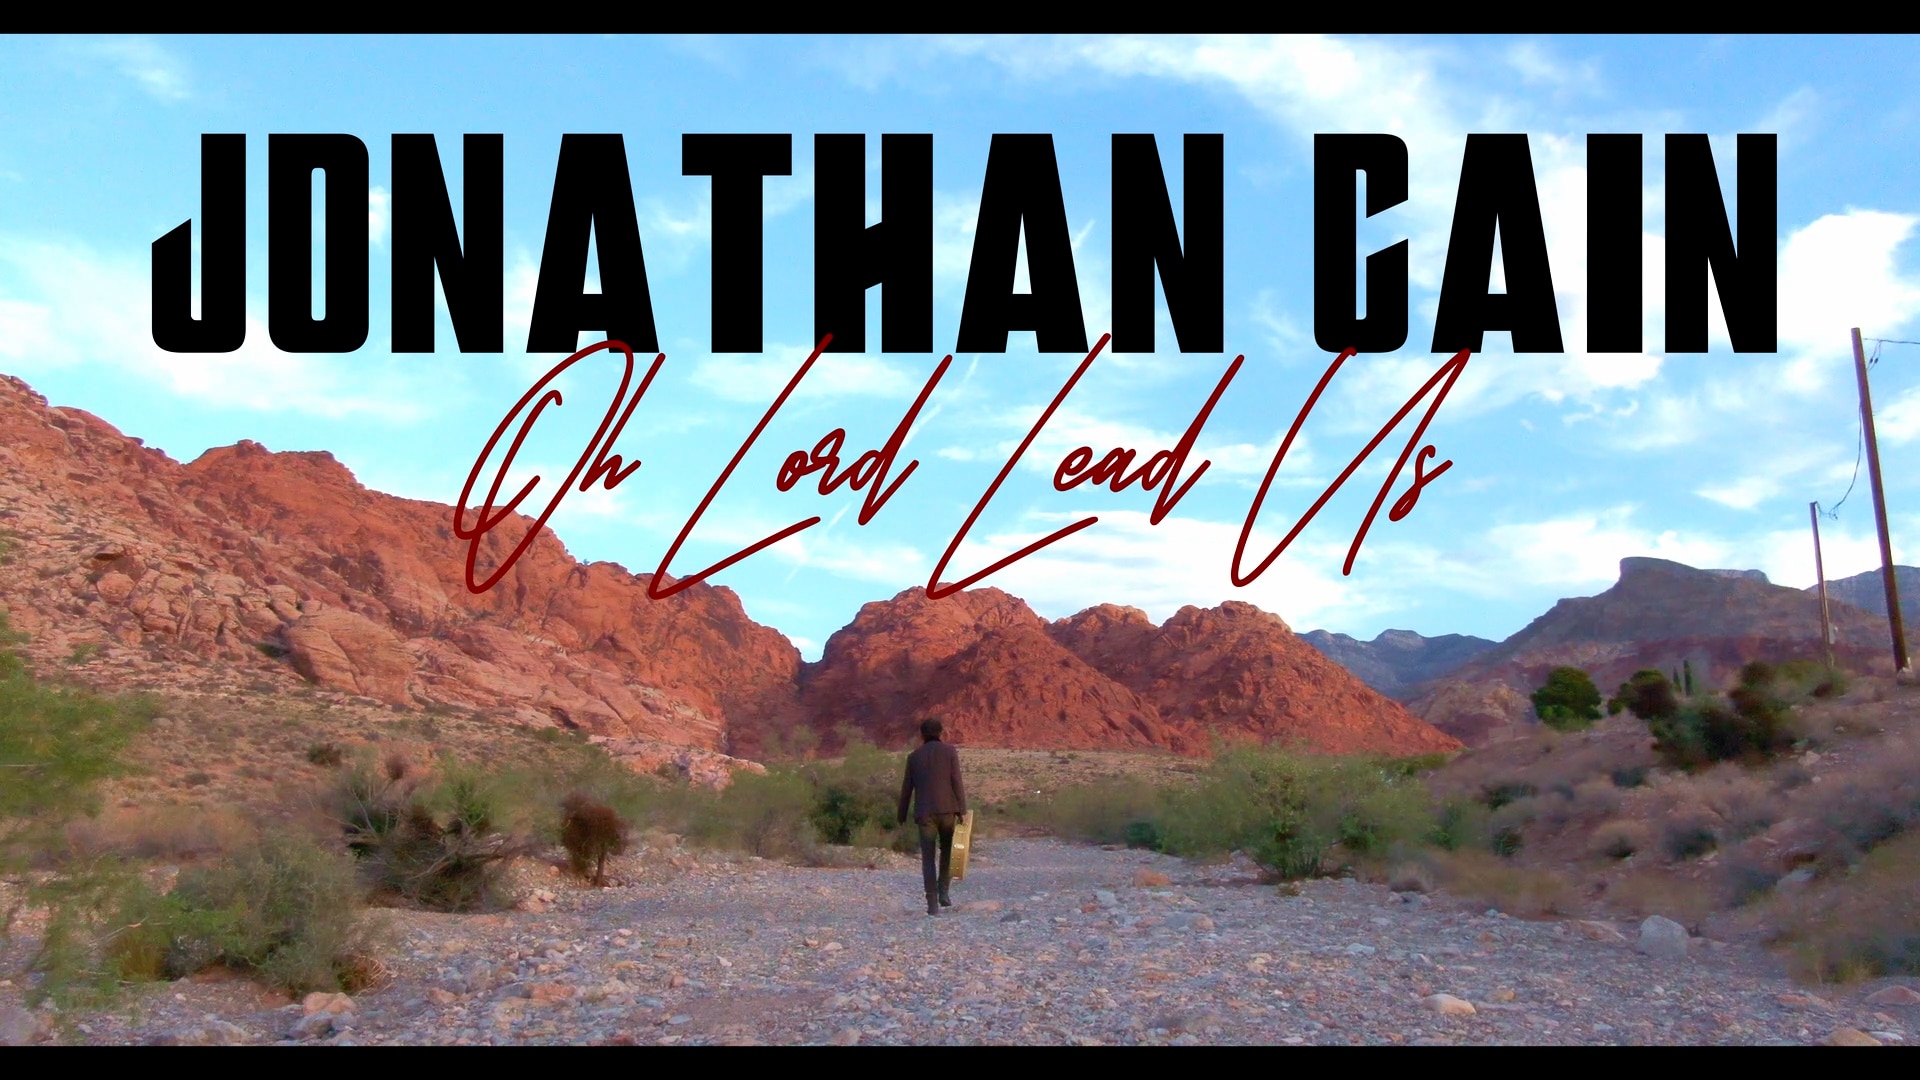 Jonathan Cain’s new single